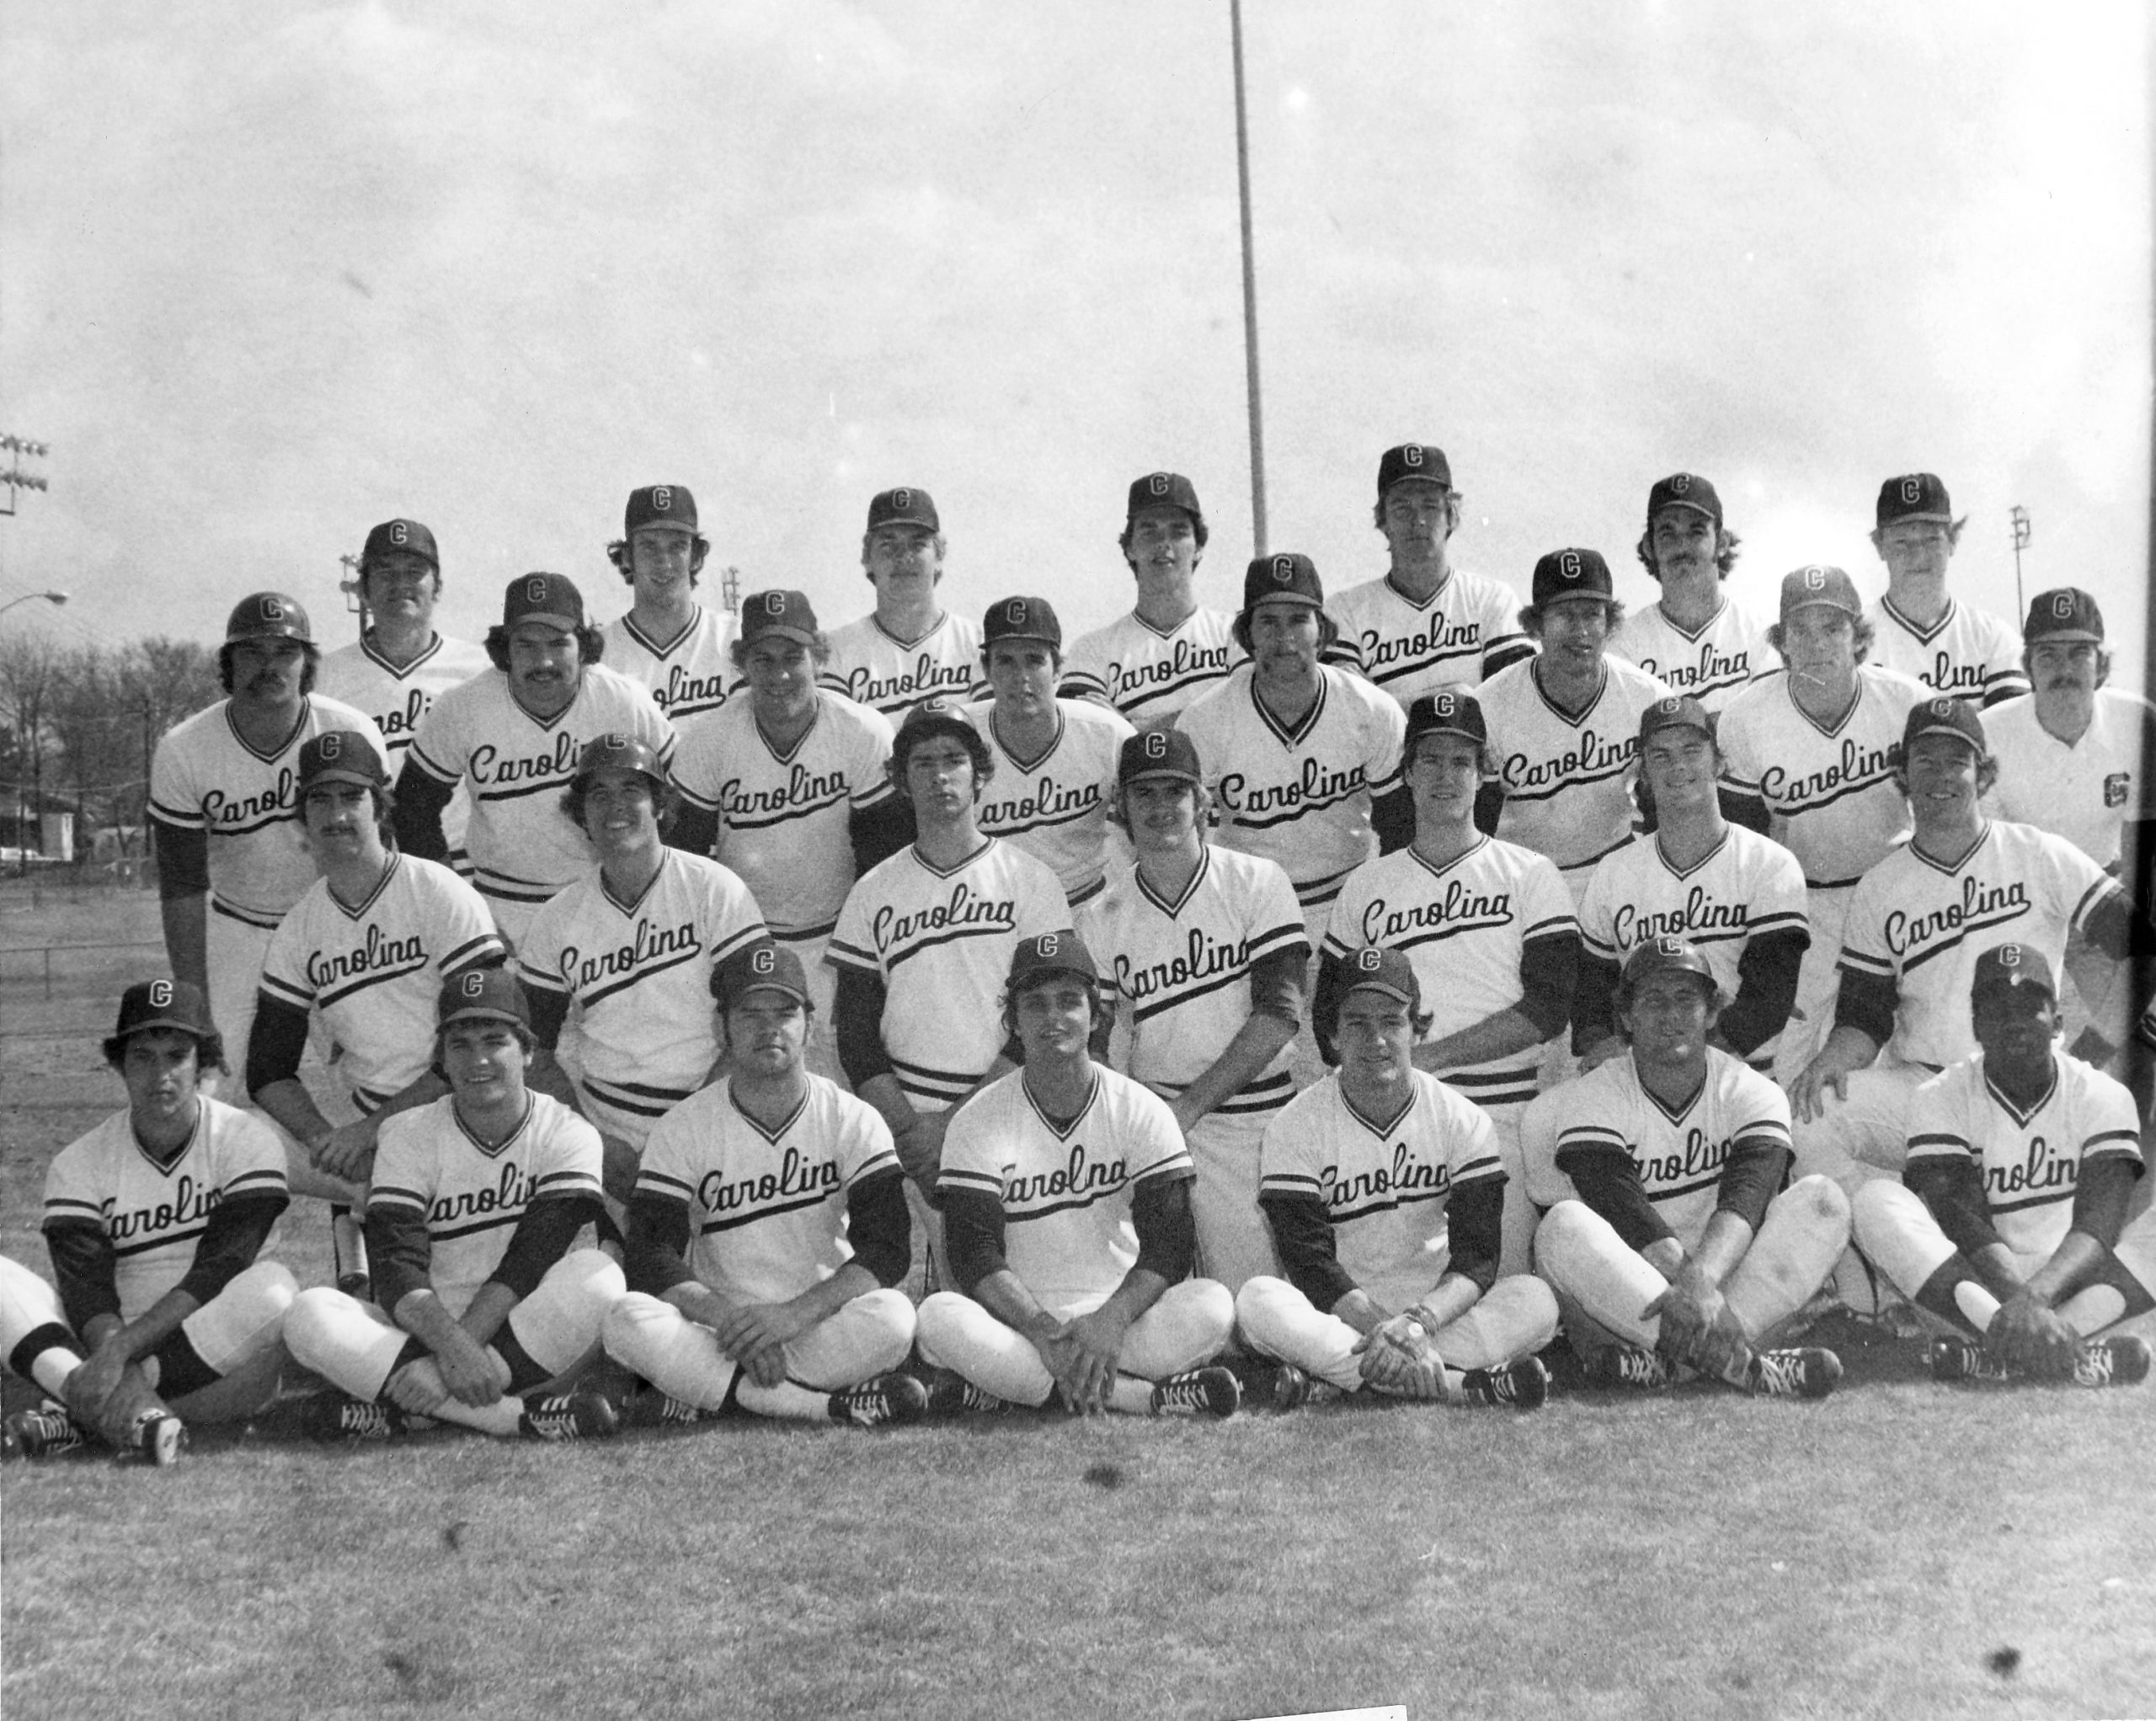 Mookie Wilson, first row, far right.  Photography courtesy of South Carolina Athletics